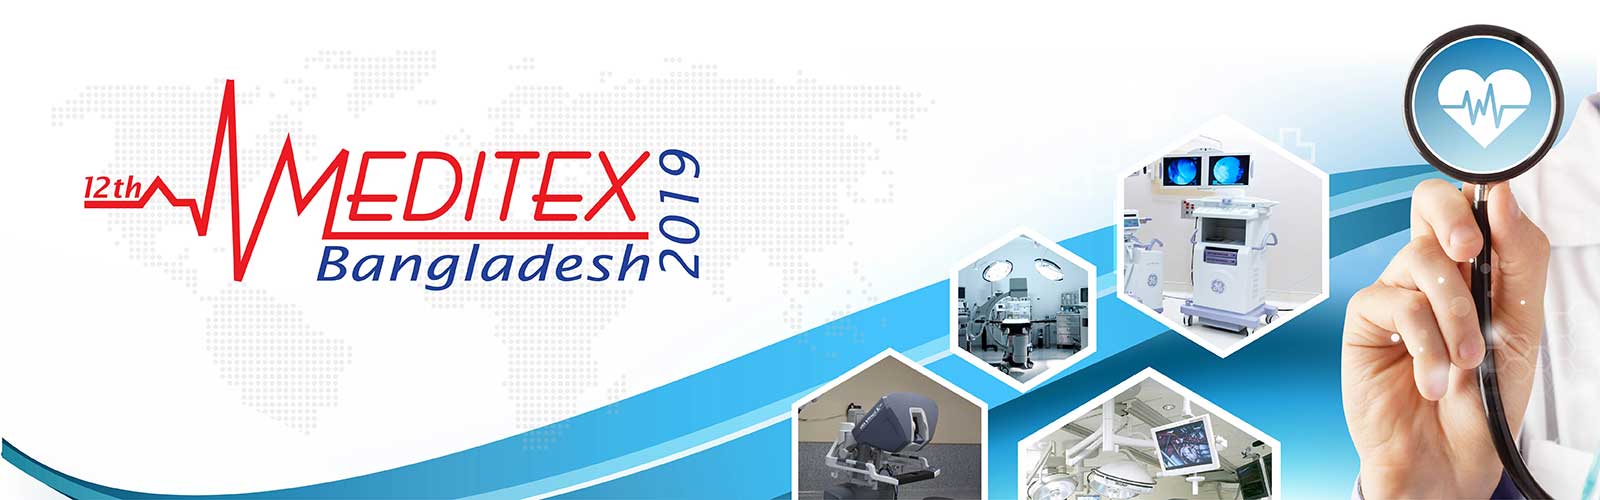  12th Meditex Bangladesh 2019